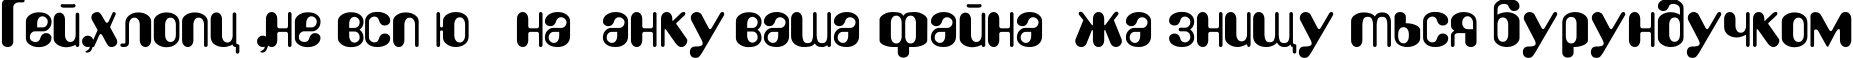 Пример написания шрифтом Amelia_DG текста на украинском